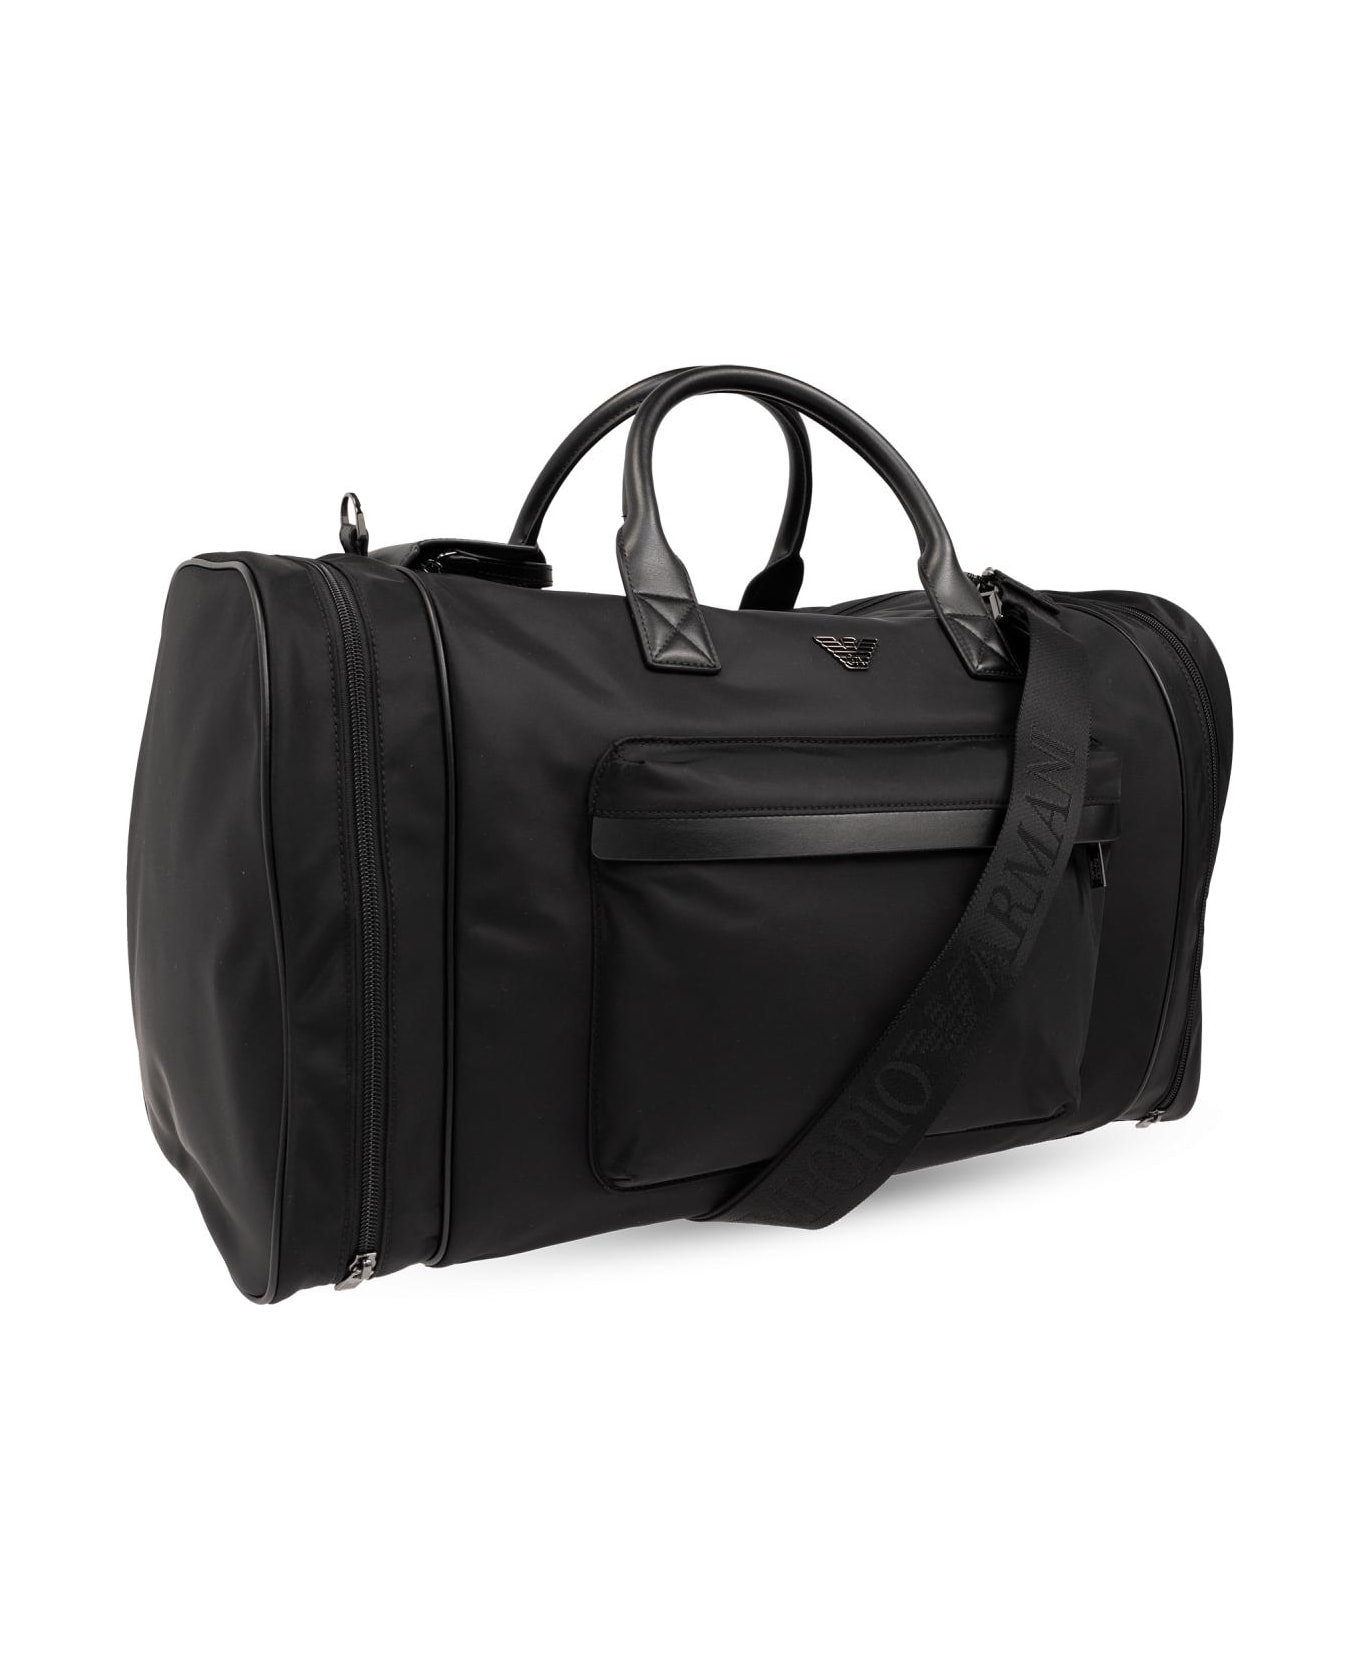 Emporio Armani 'sustainability' Collection Travel Bag - Nero トラベルバッグ